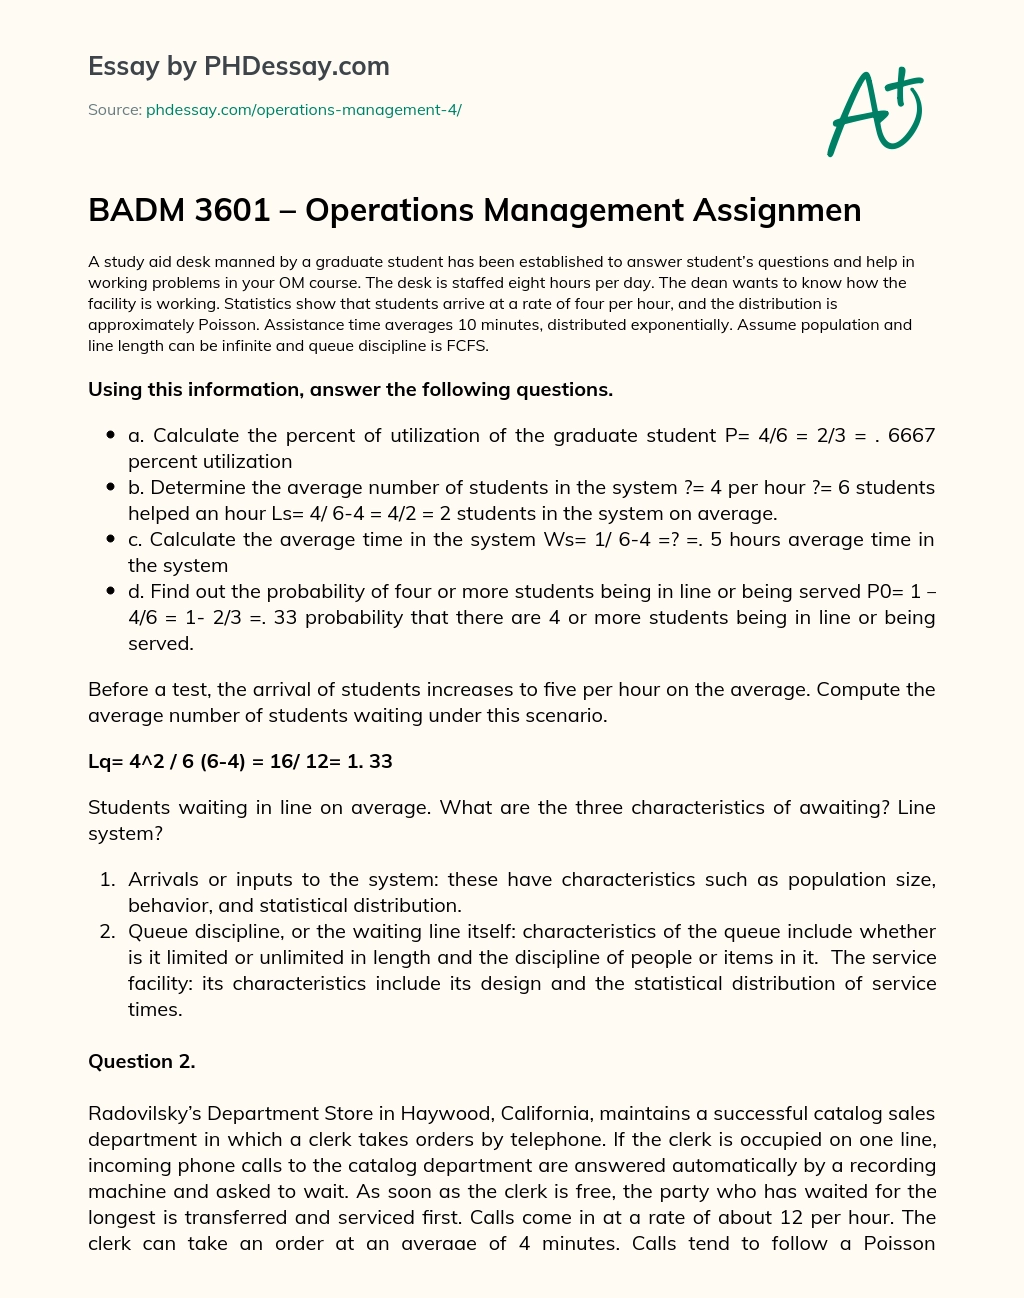 BADM 3601 – Operations Management Assignmen essay